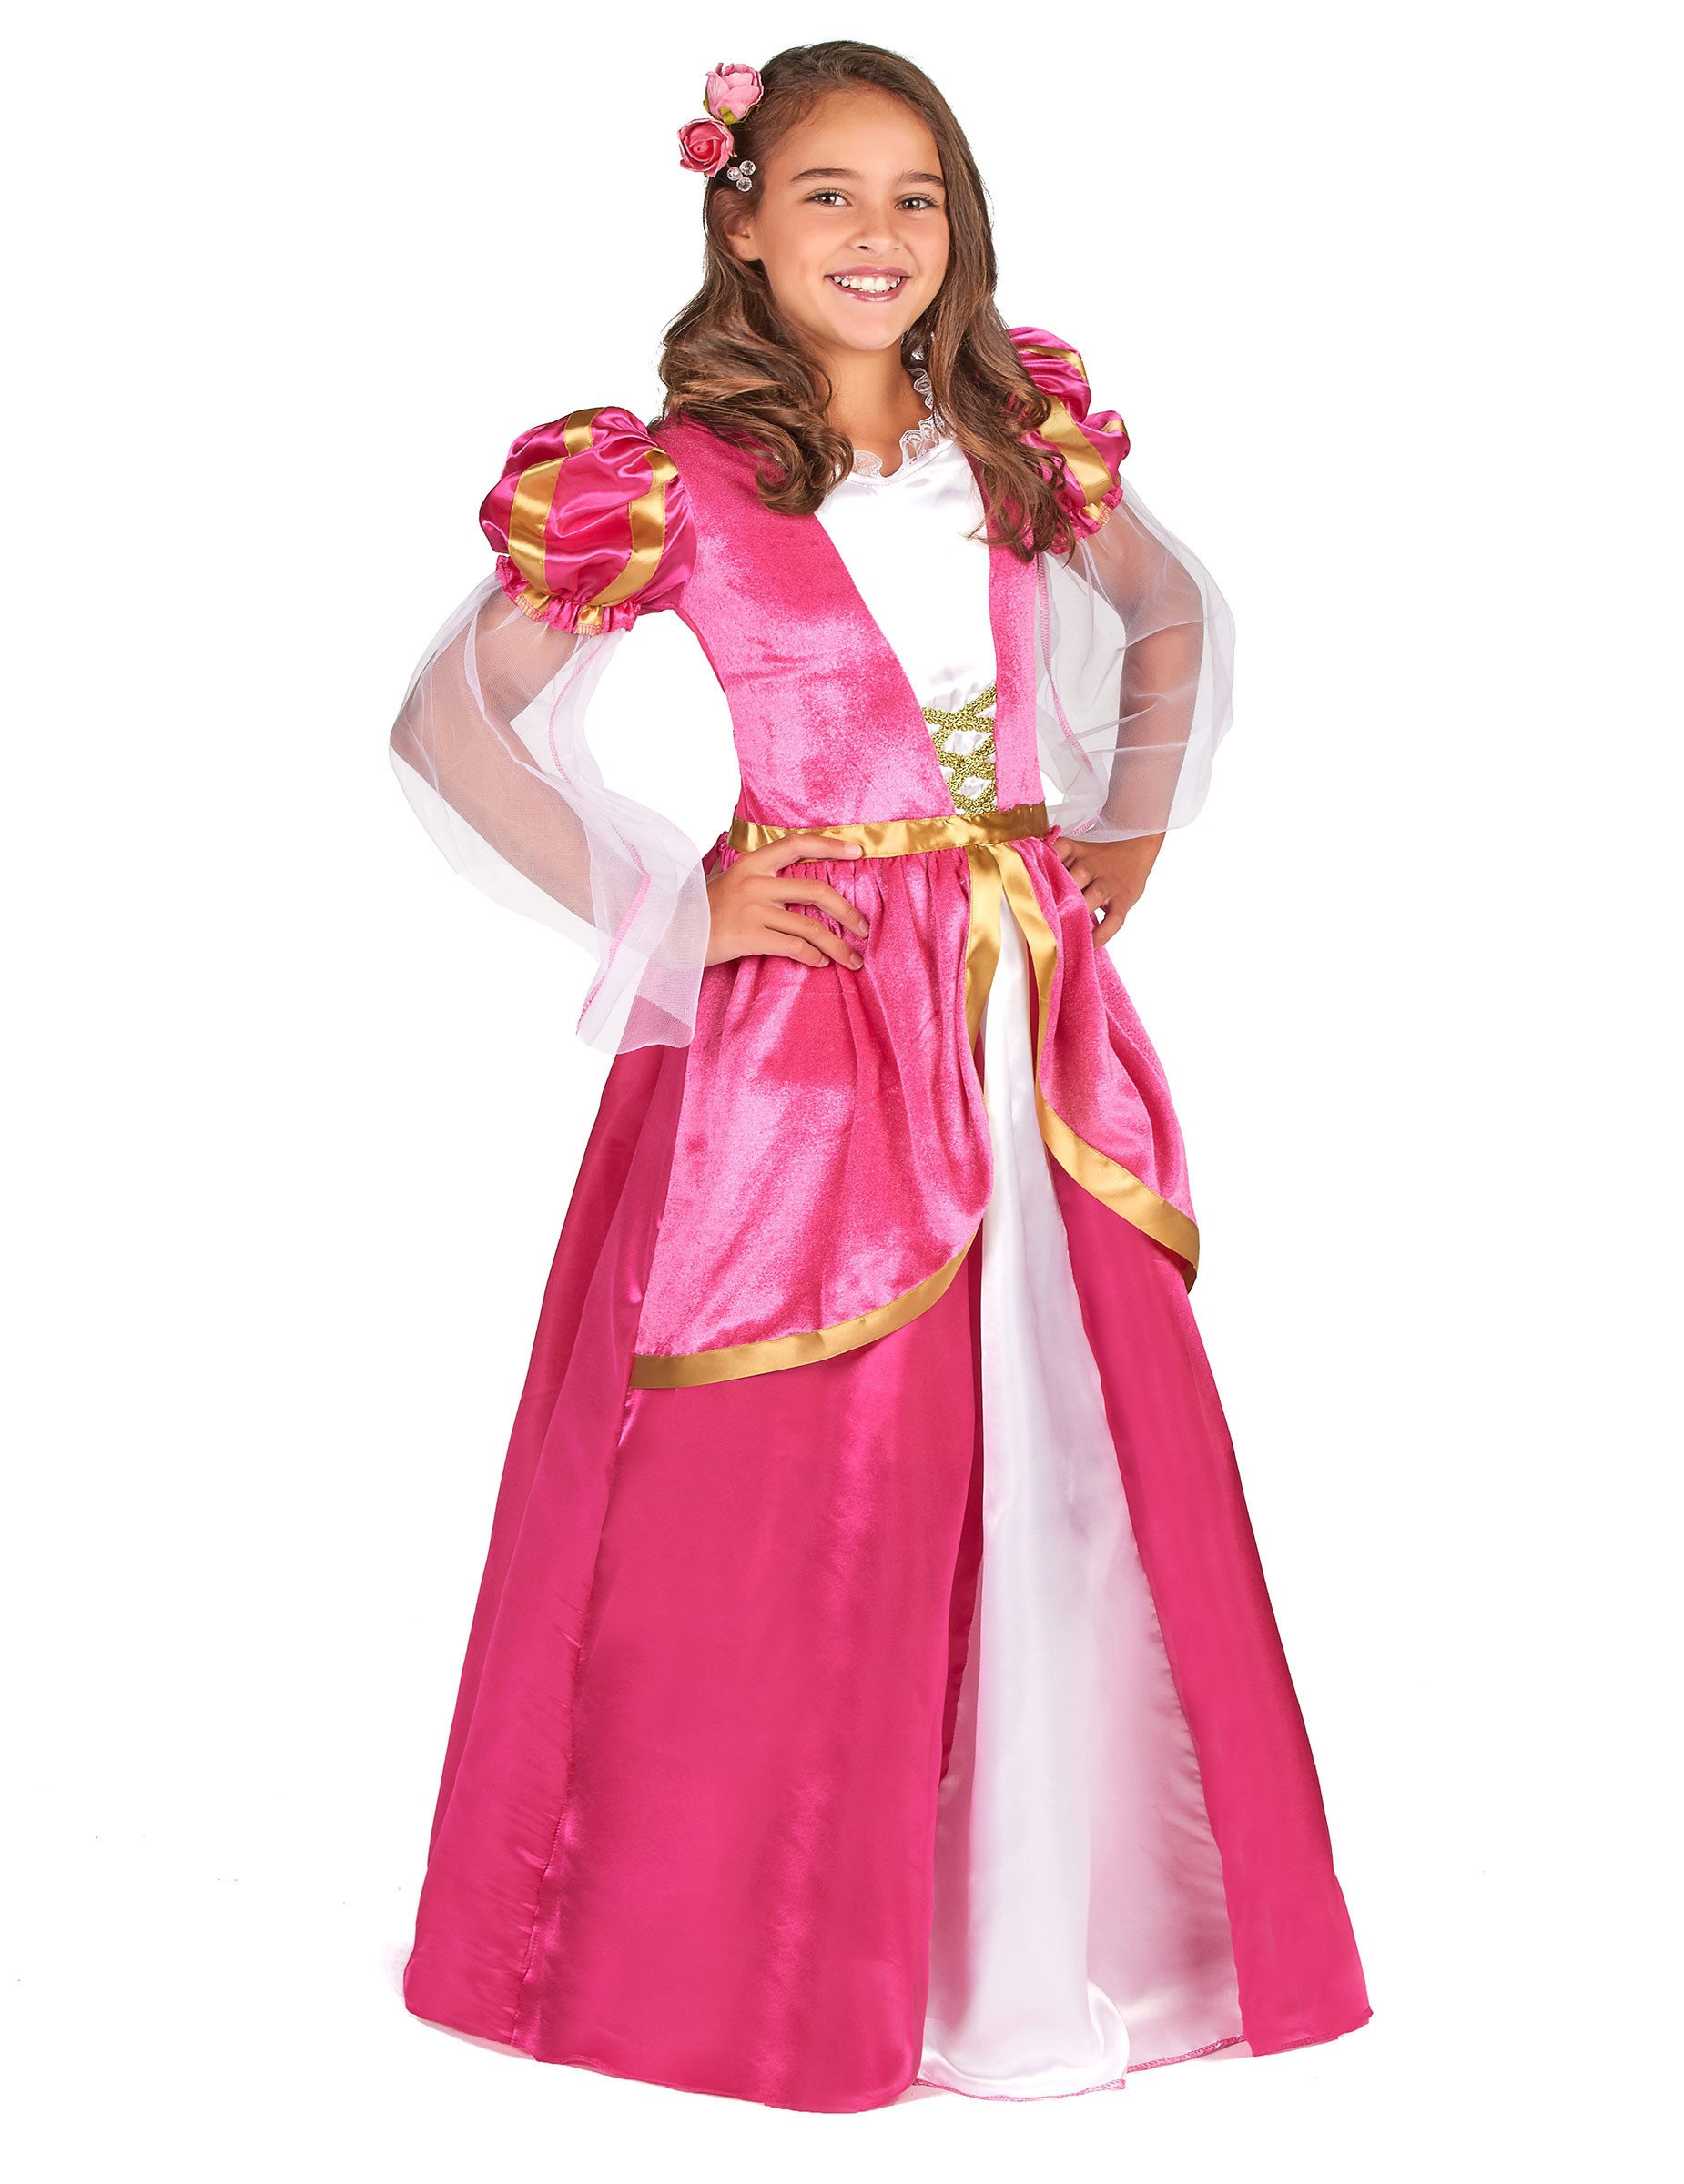 Deguisement princesse rose lumineuse - taille s 3-4 ans